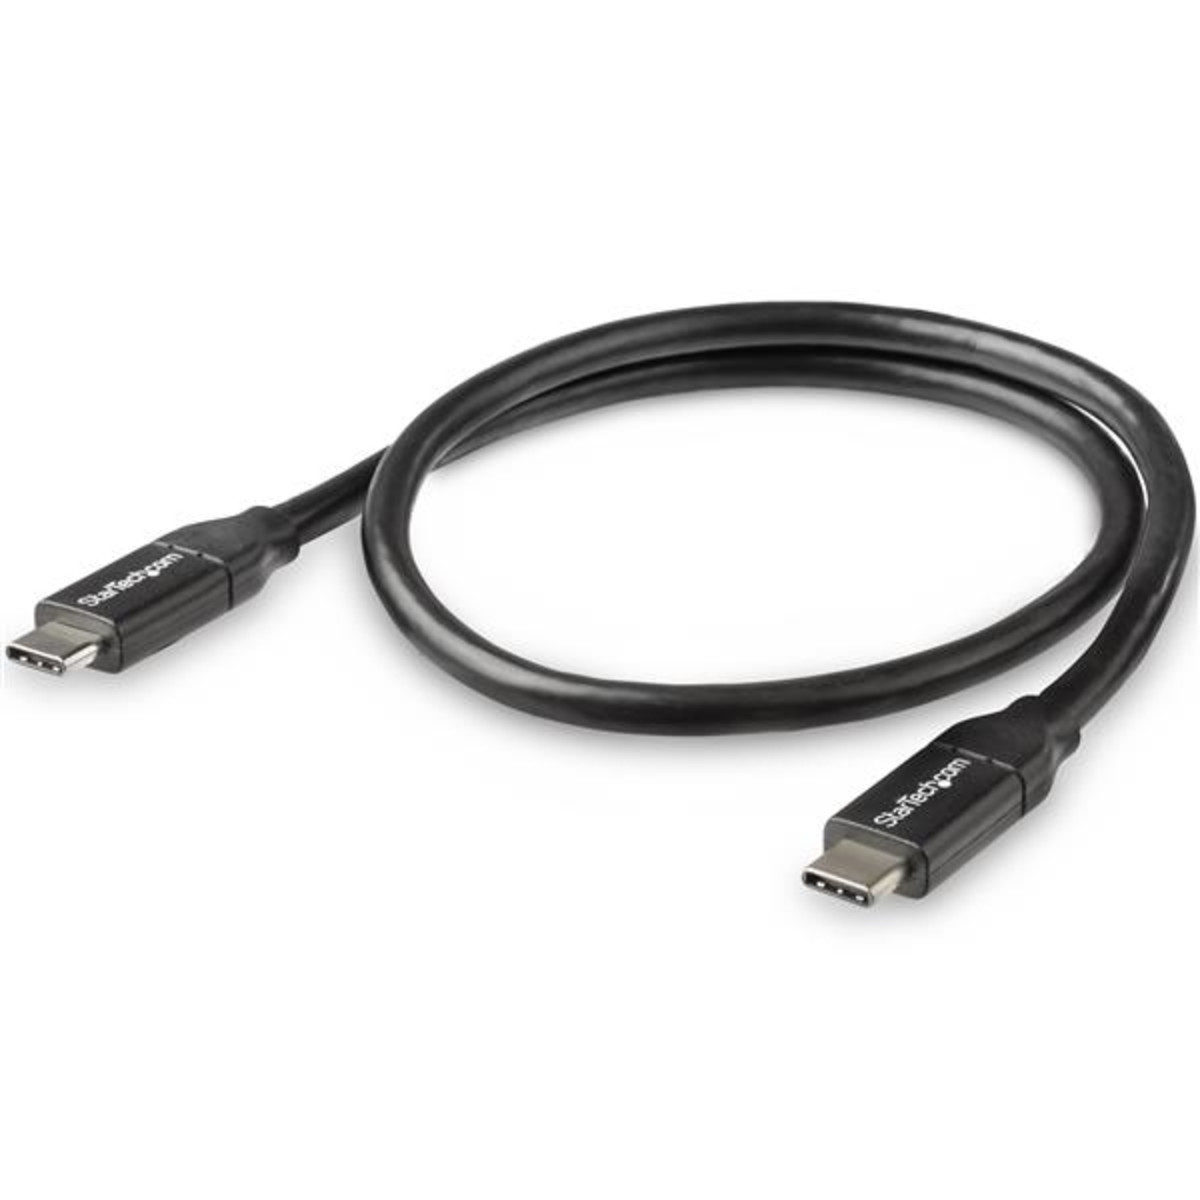 Cable USB C w/ 5A PD USB 2.0-0.5m